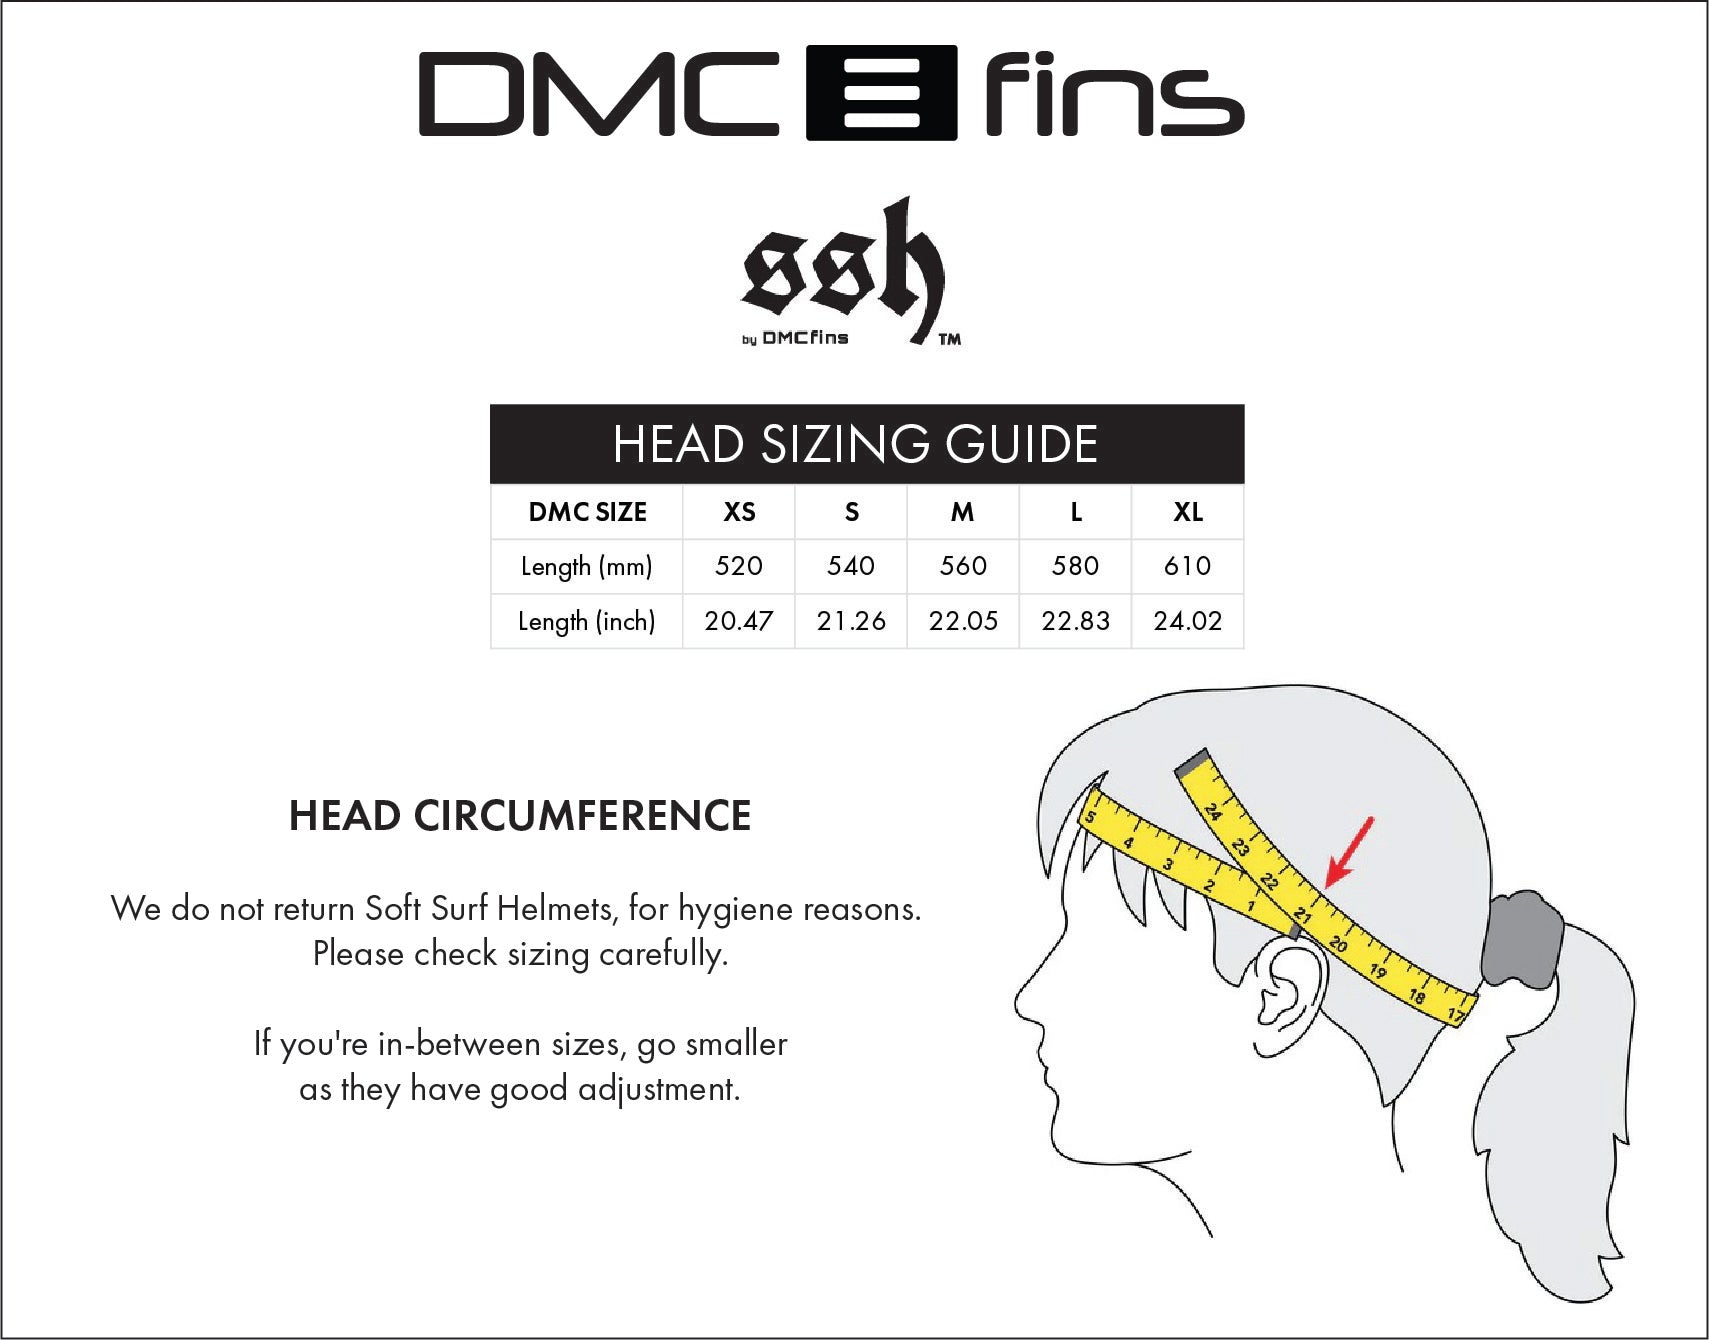 DMC SSH Sizing Guide